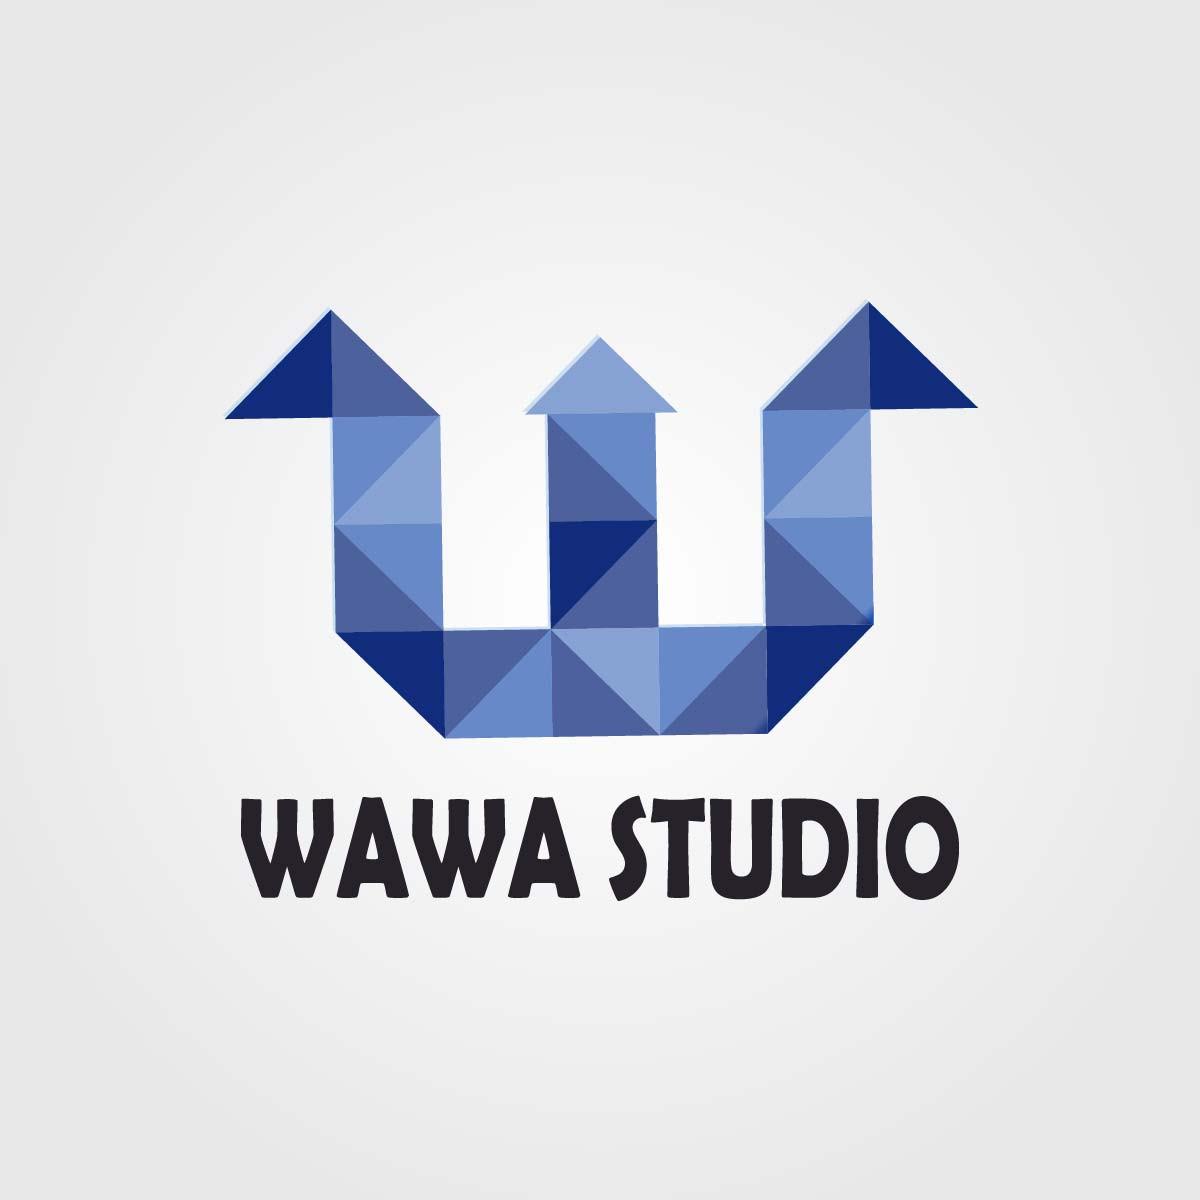 Wawa Studio